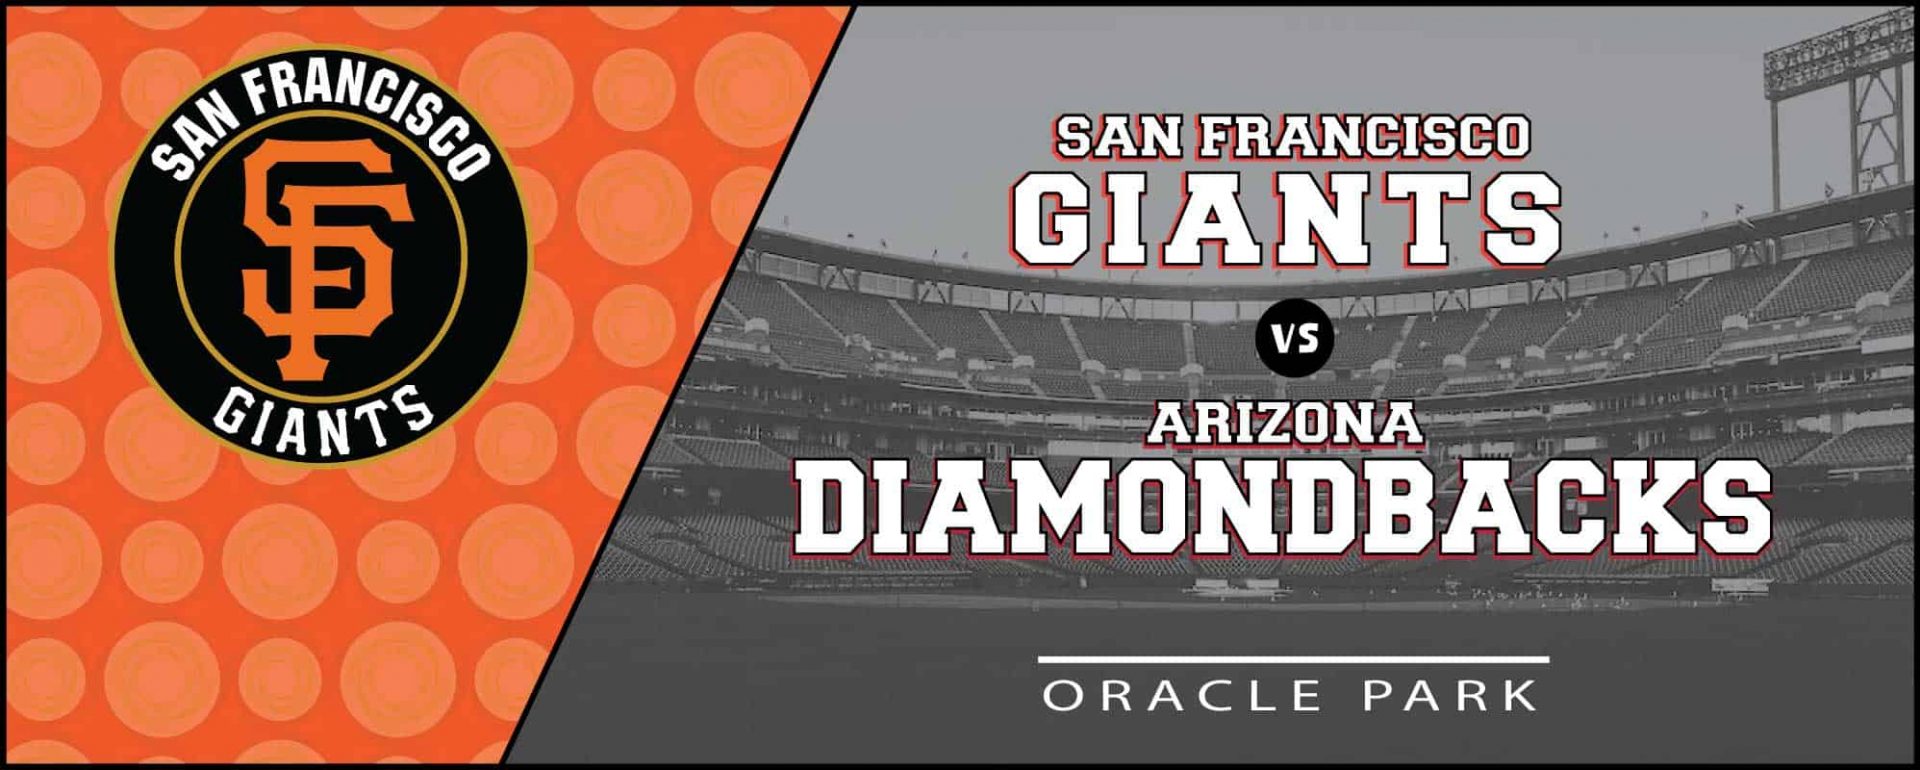 Giants vs. Diamondbacks at Oracle Park